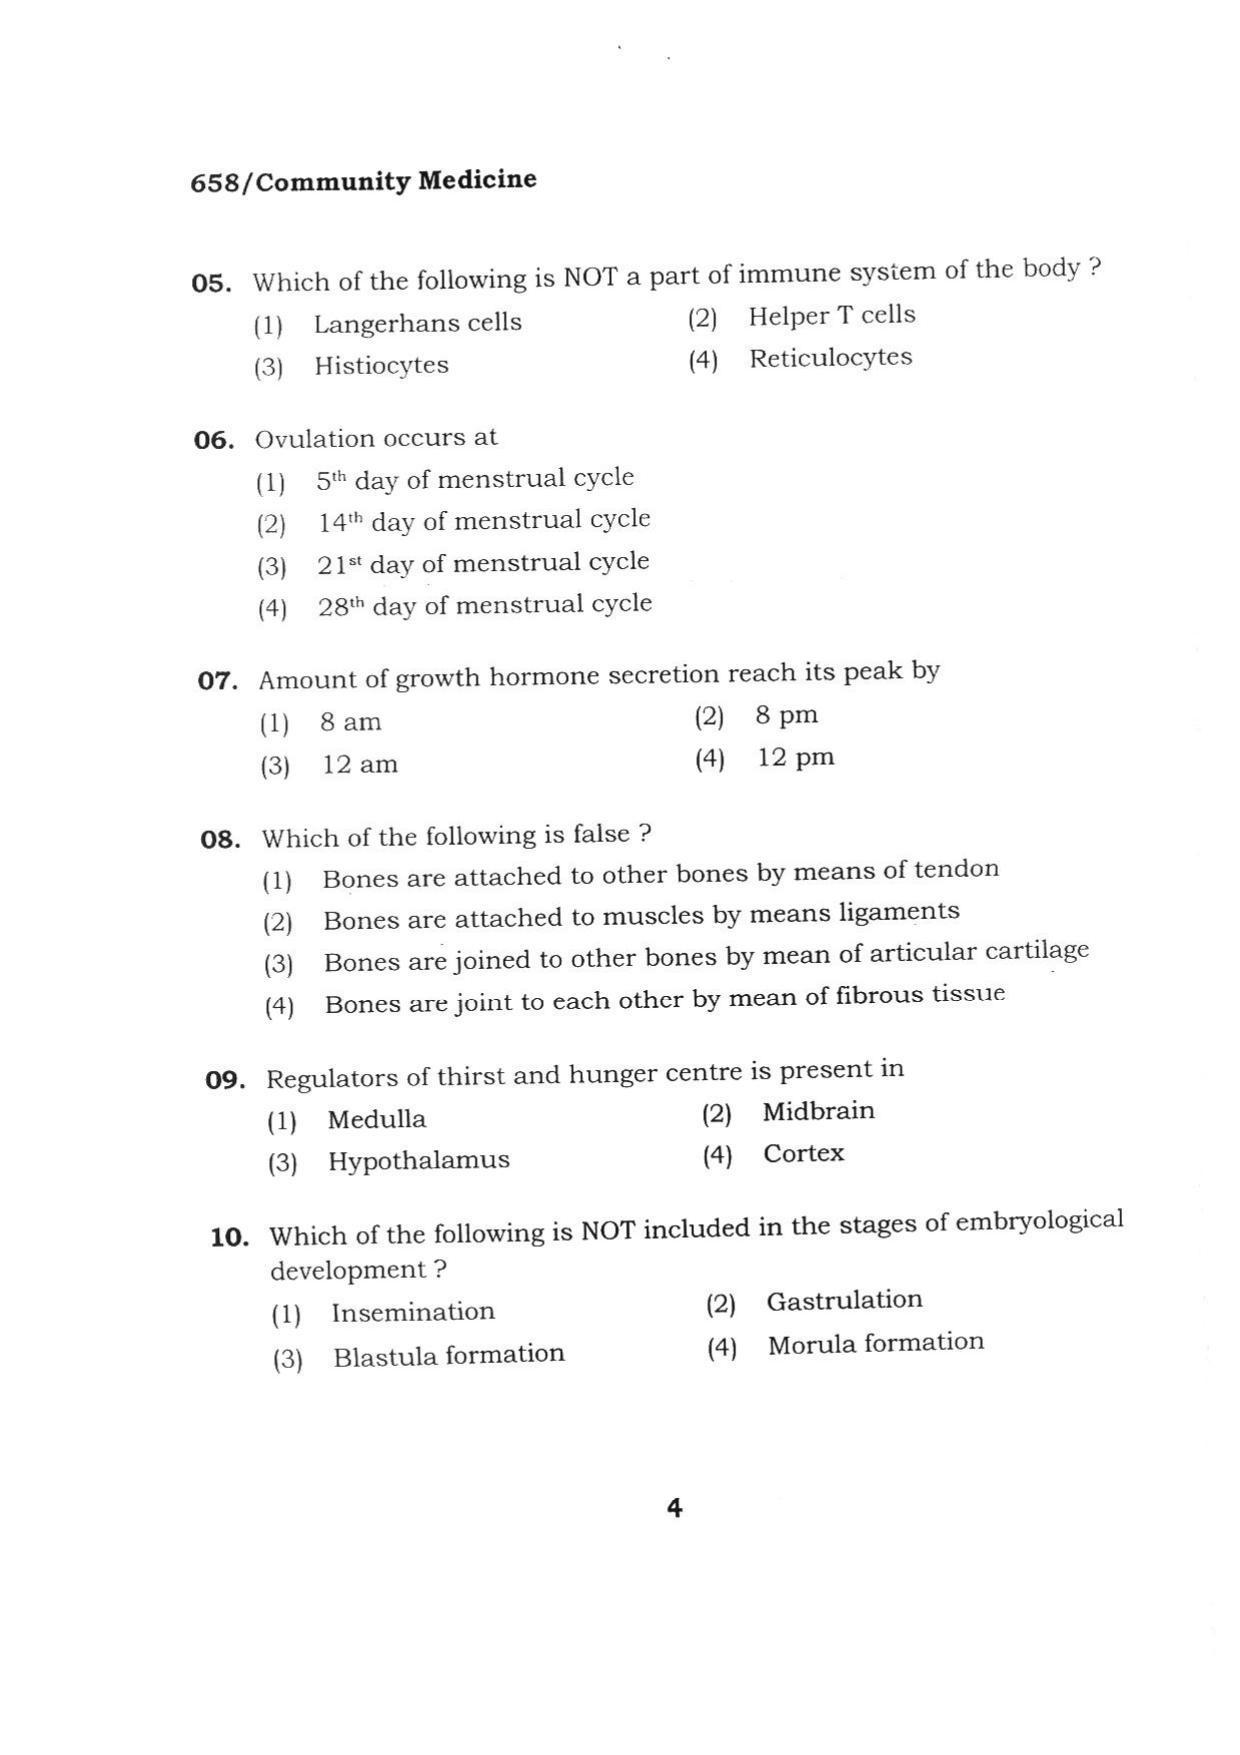 BHU RET COMMUNITY MEDICINE 2015 Question Paper - Page 4